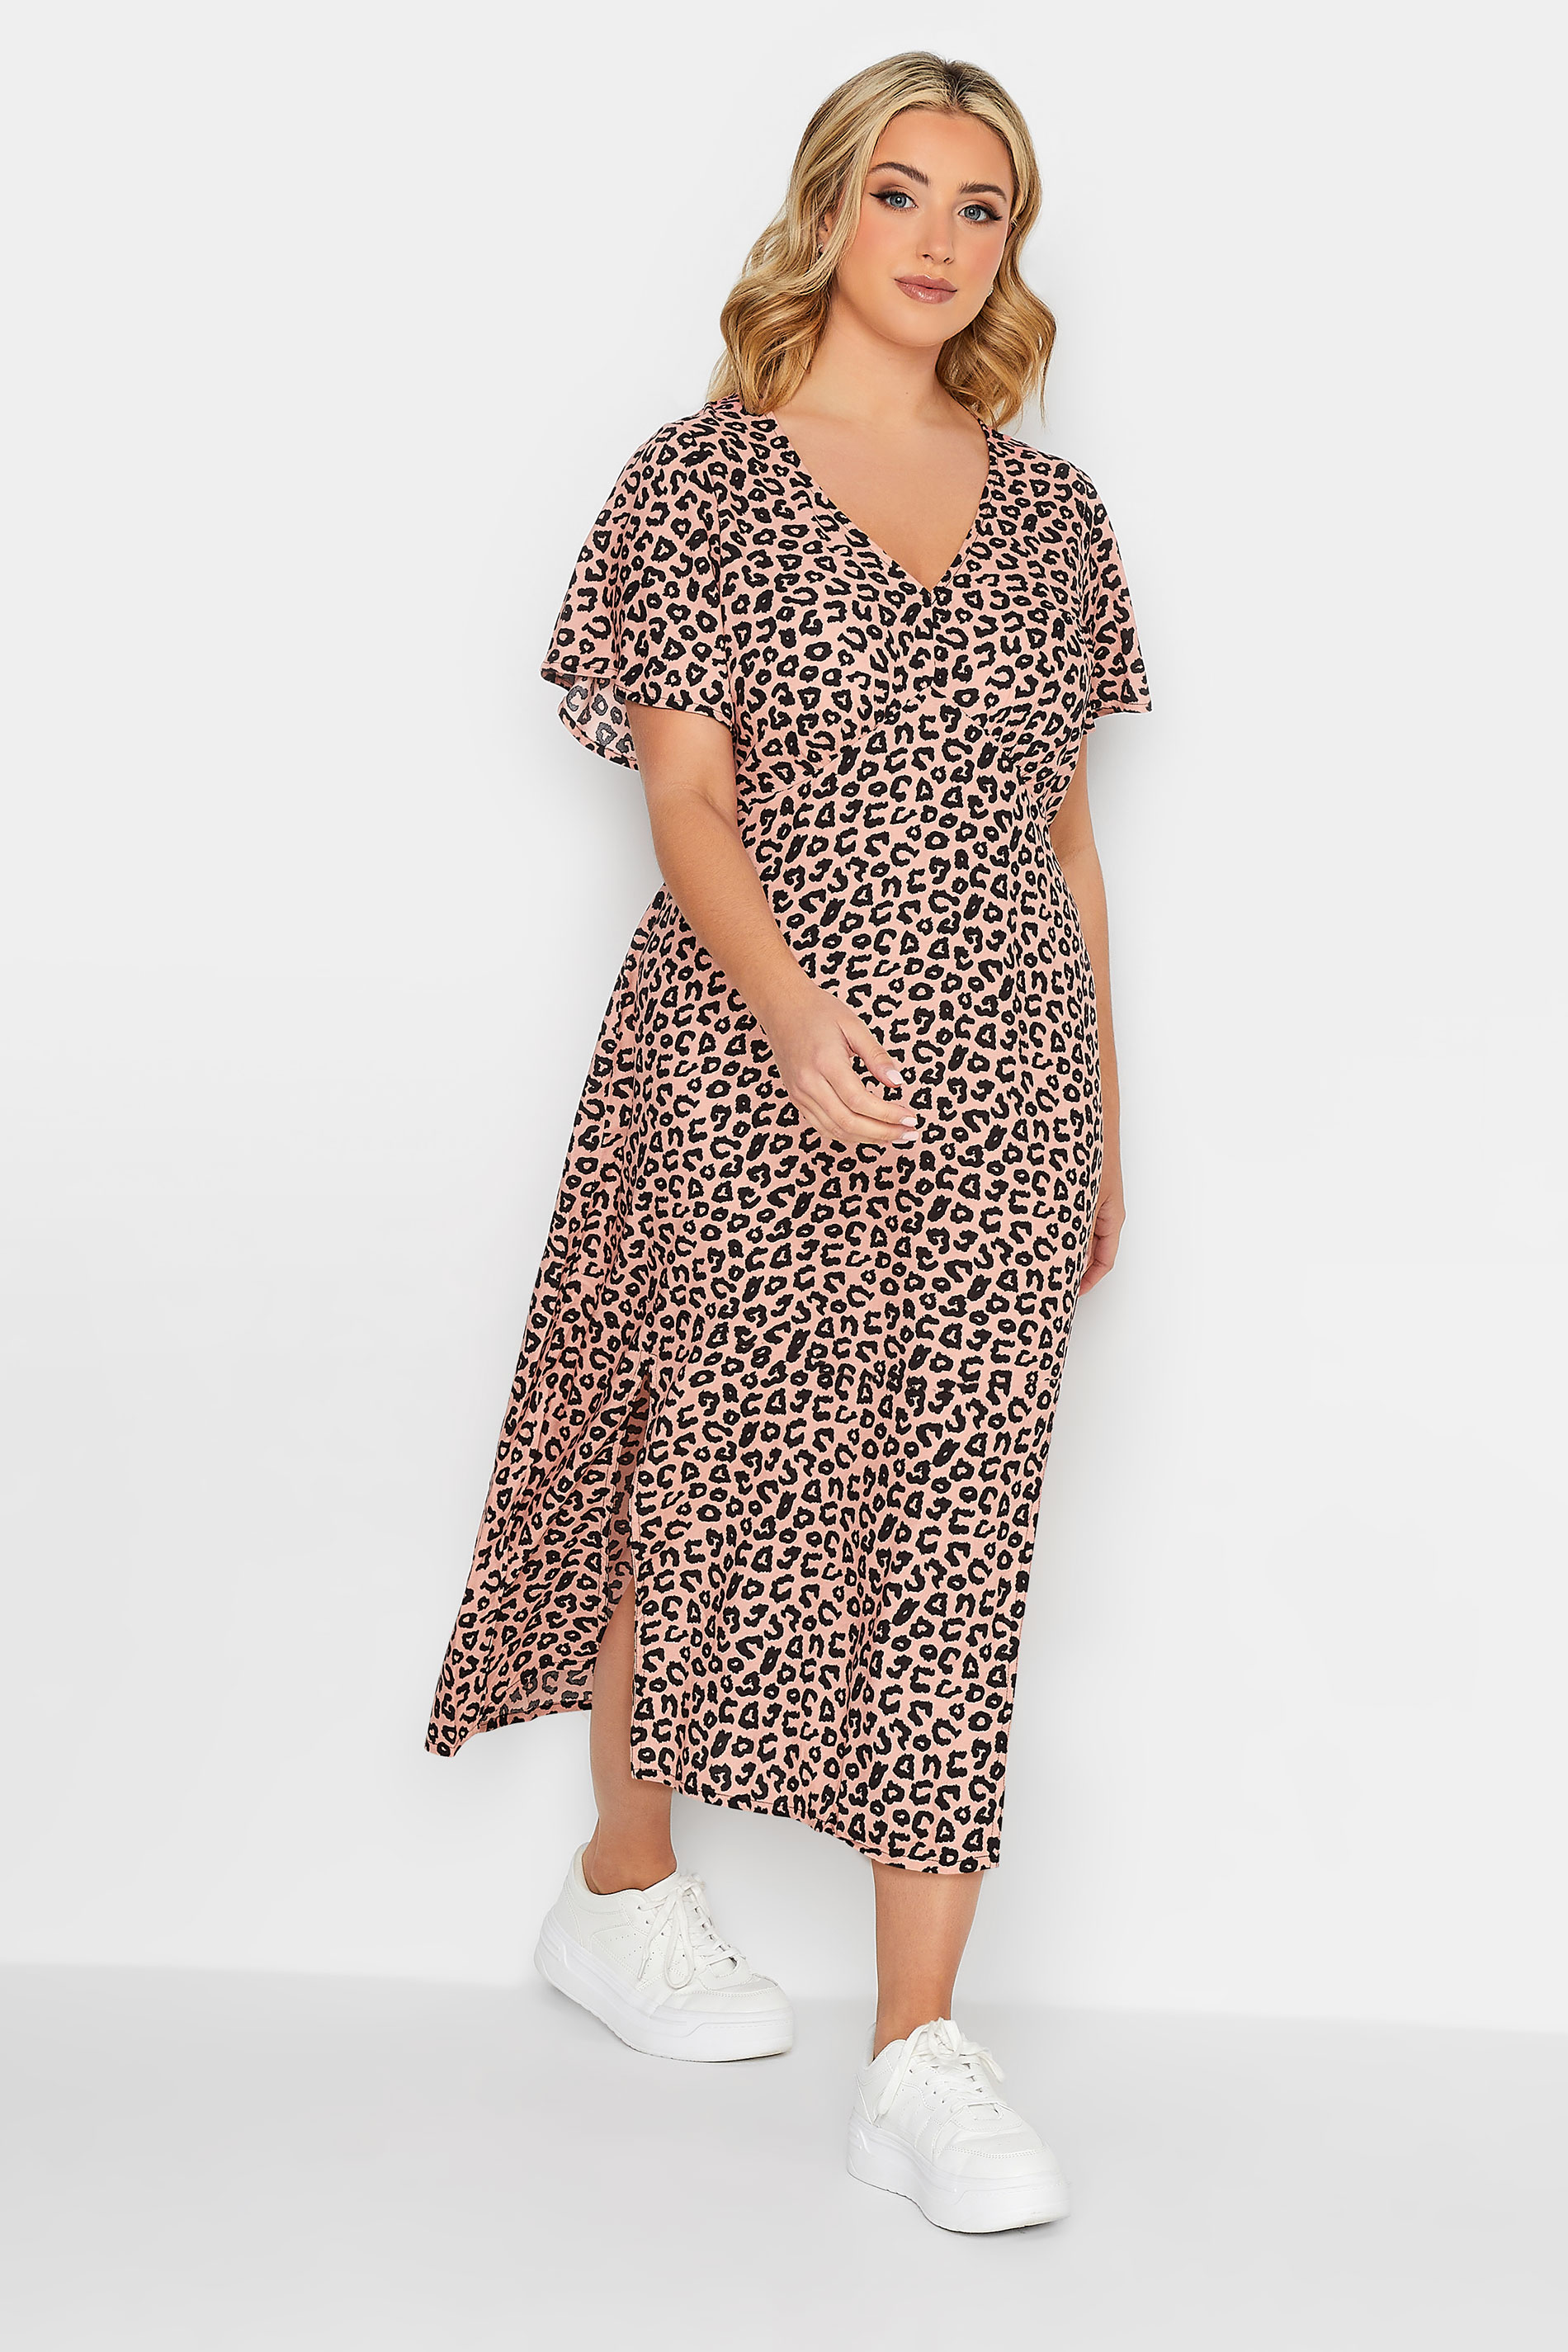 YOURS PETITE Plus Size Pink Leopard Print Midi Tea Dress | Yours Clothing 2